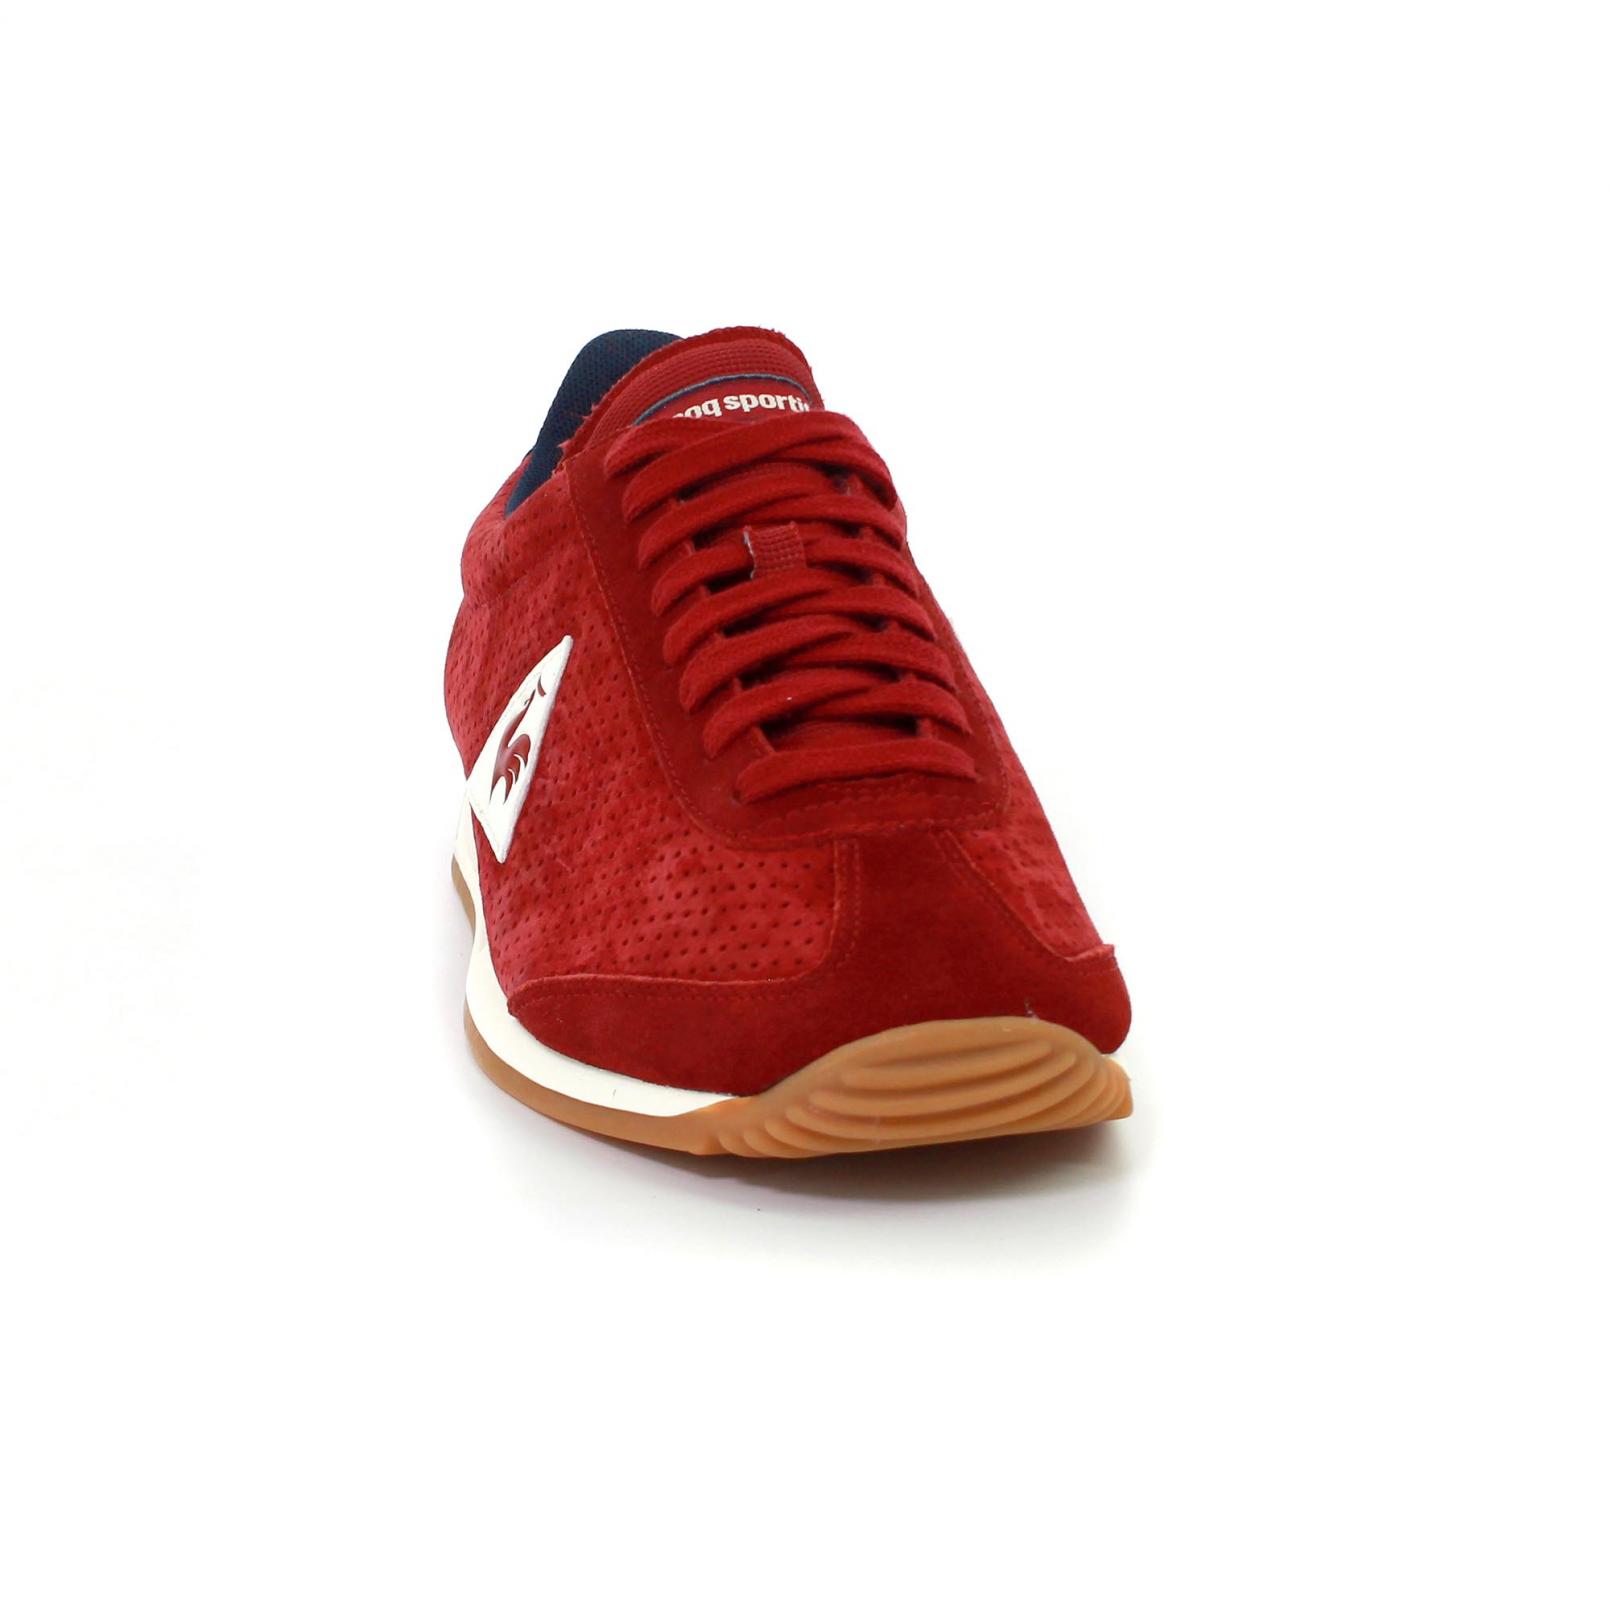 Shoes – Le Coq Sportif Quartz Perforated Nubuck Red/Blue